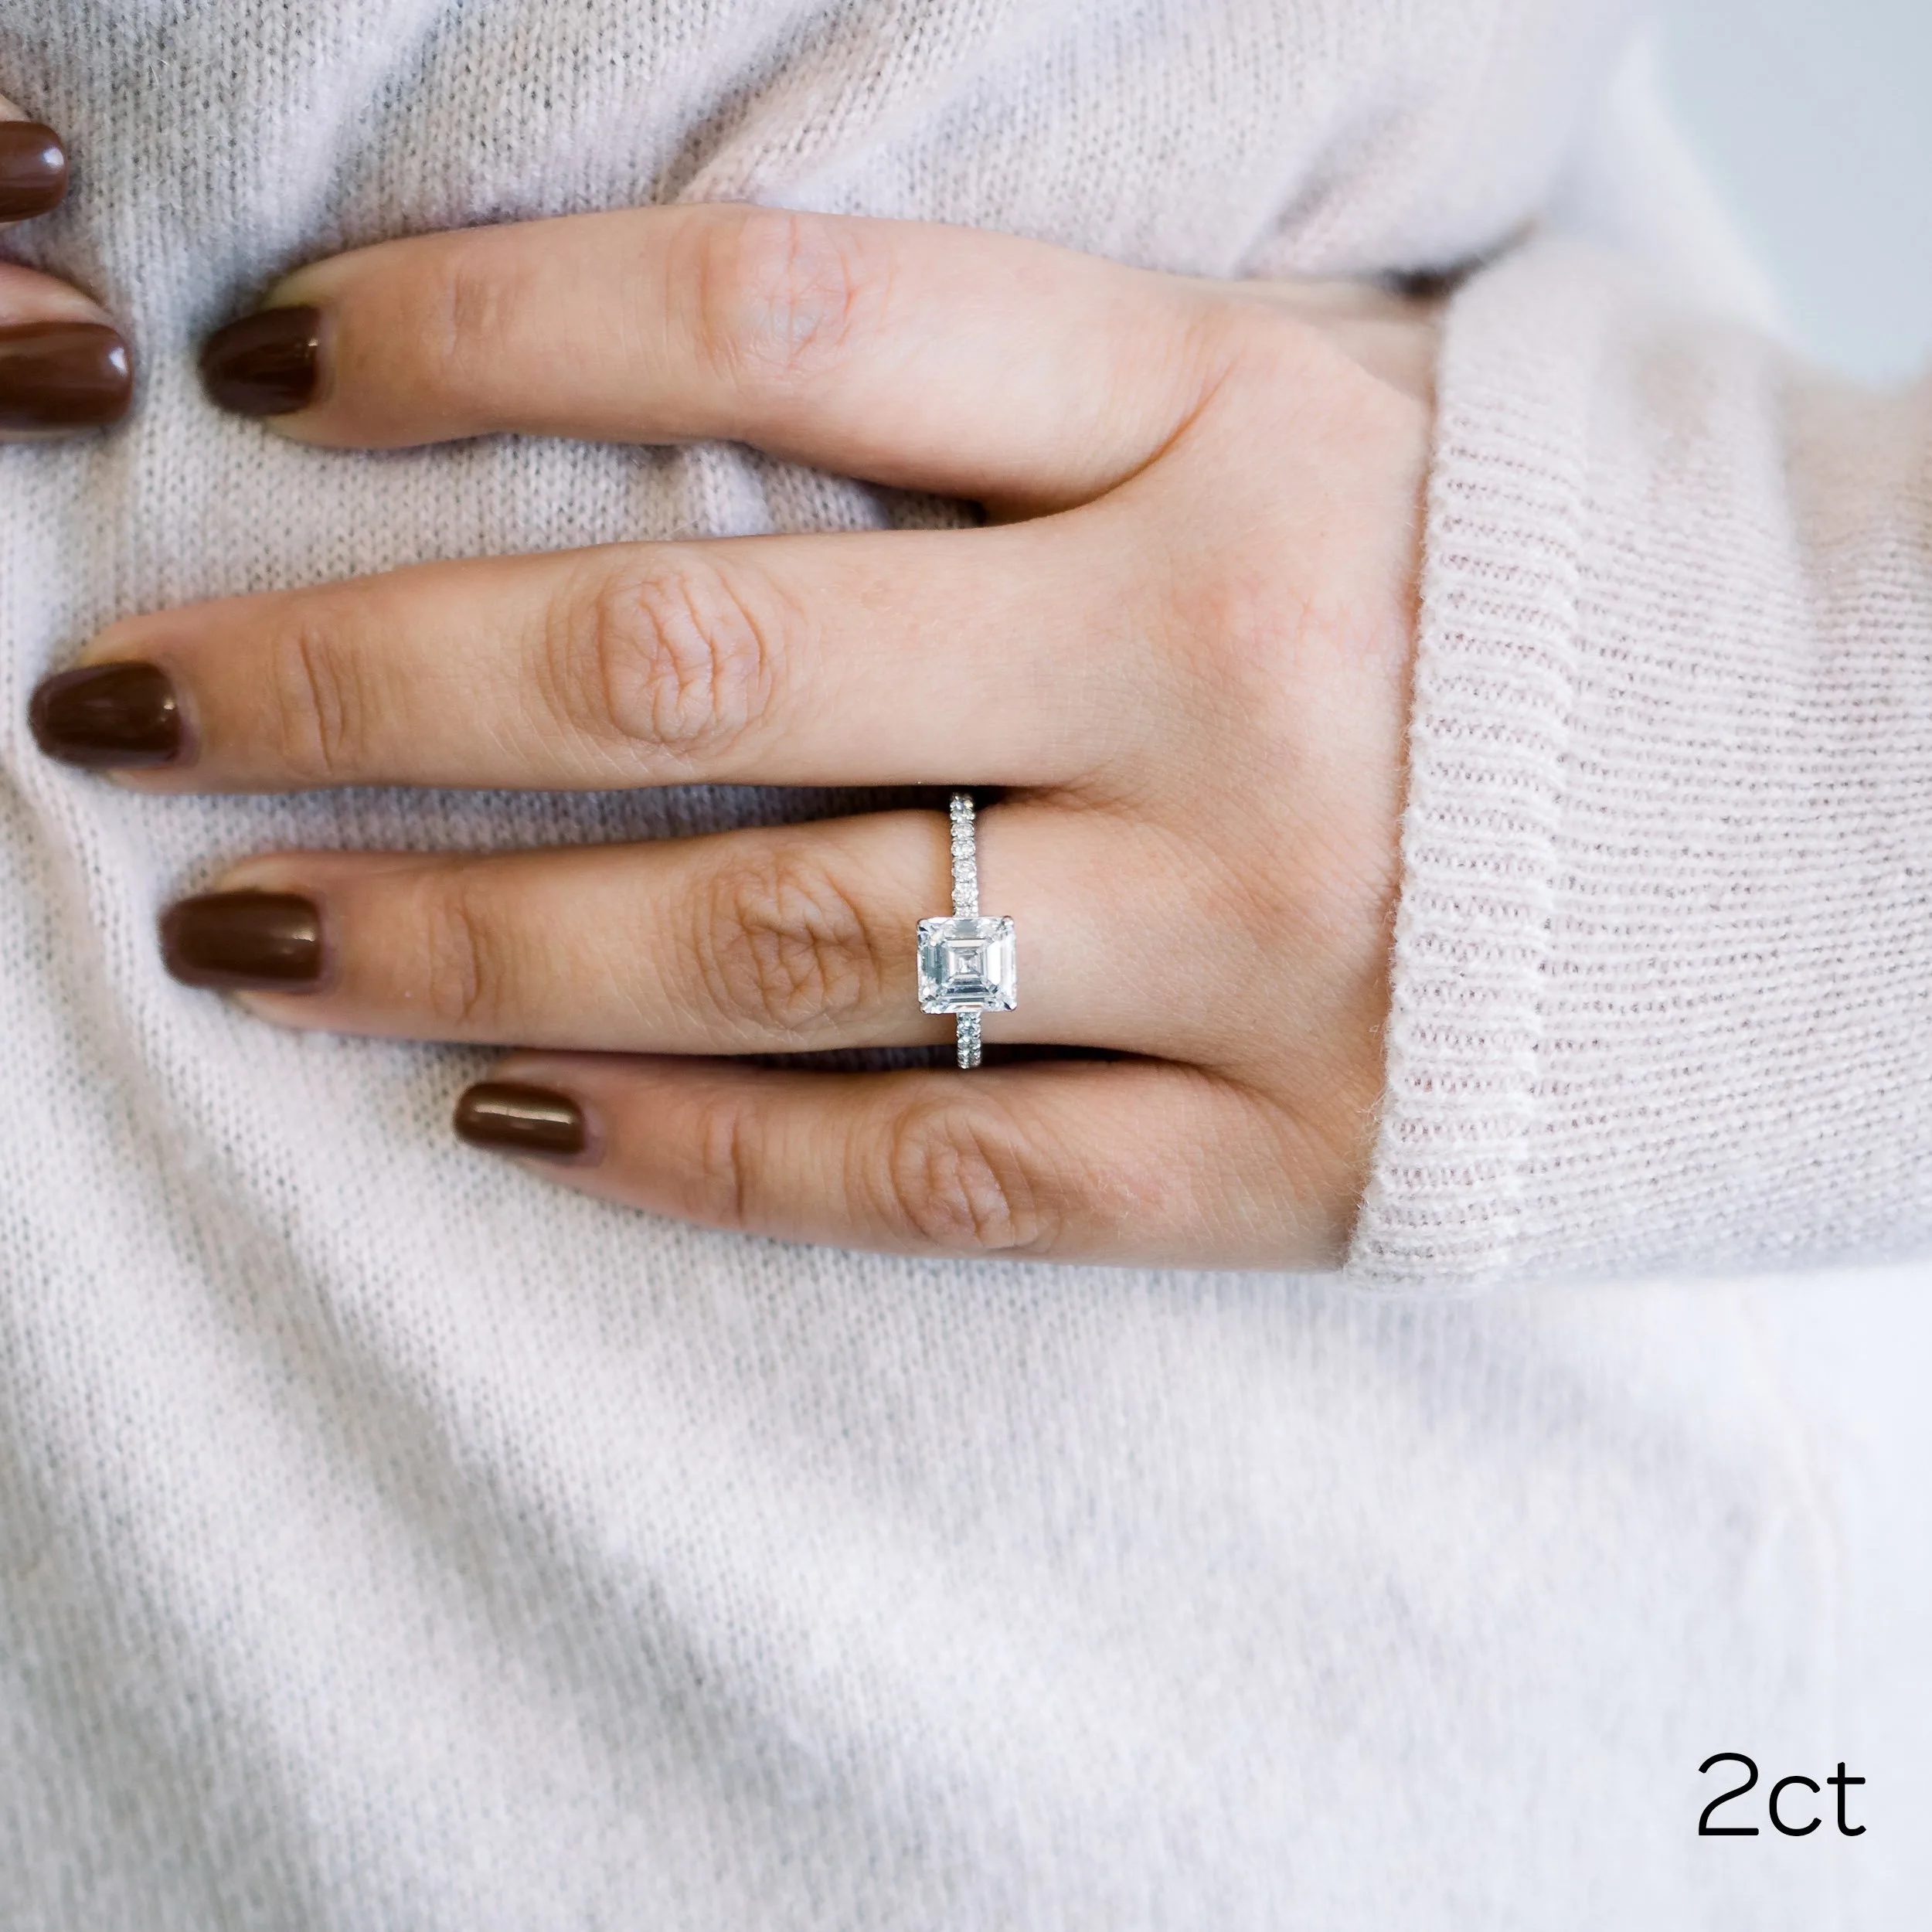 2ct lab diamond engagement ring